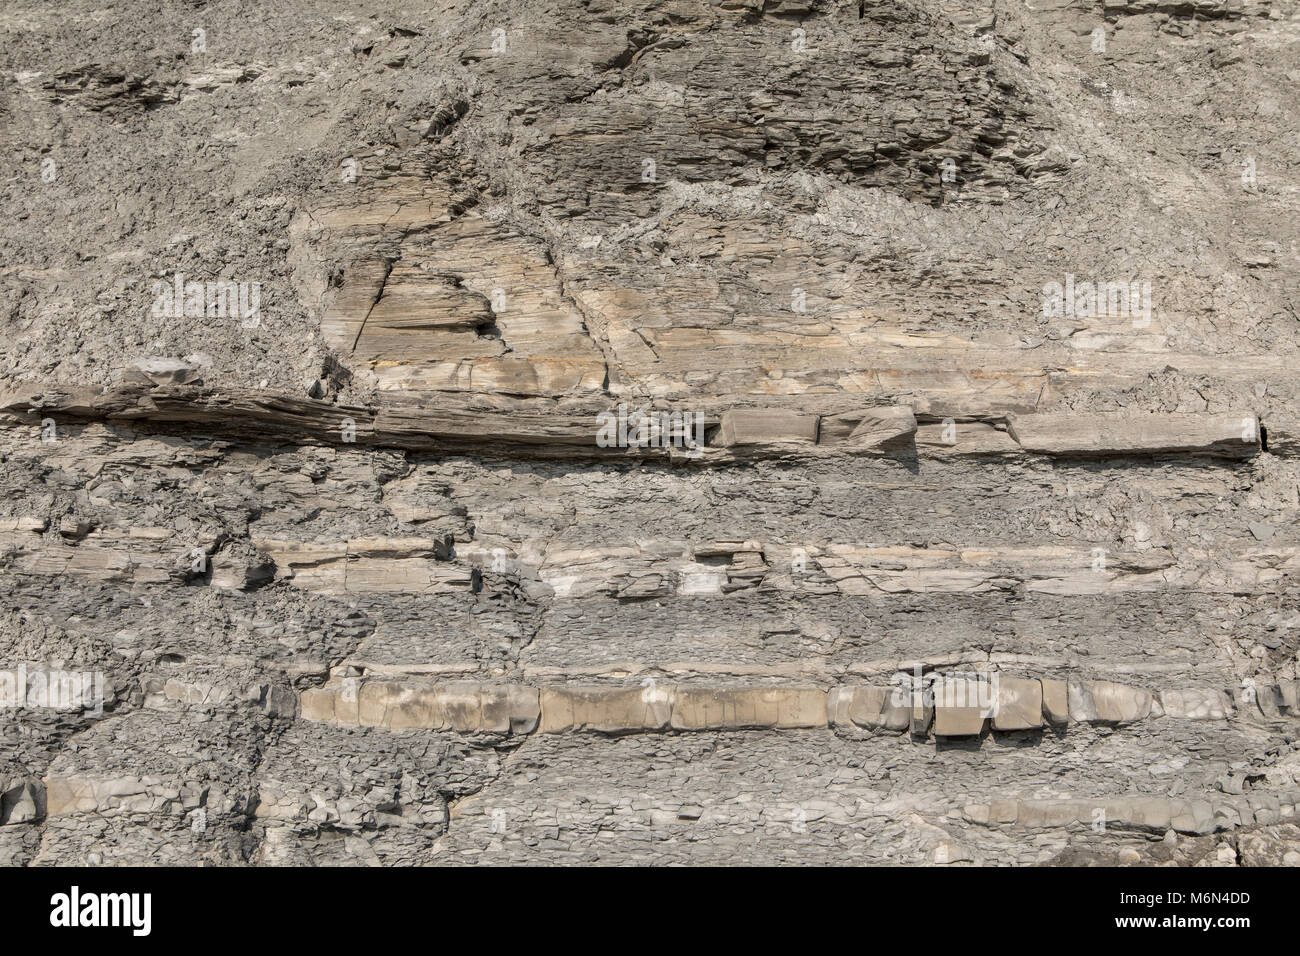 sedimentary rock layers